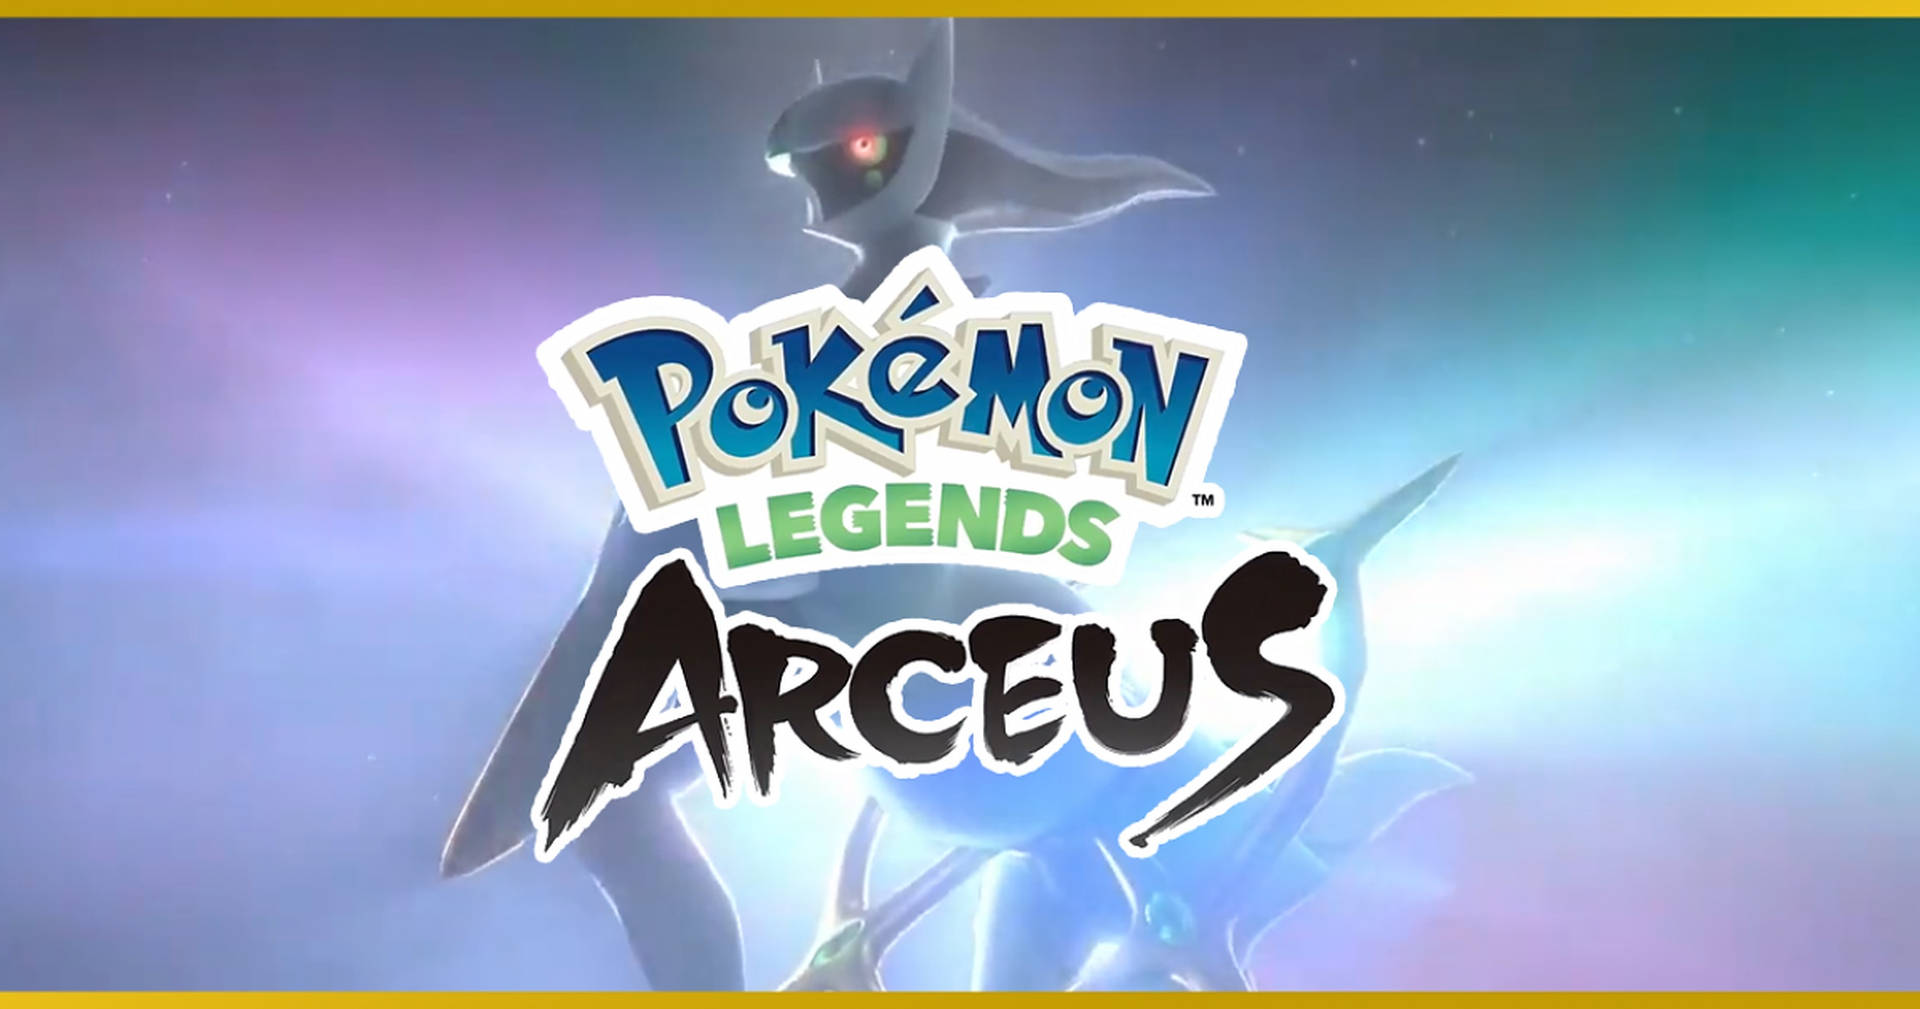 Pokemon Legends Arceus Cover Art